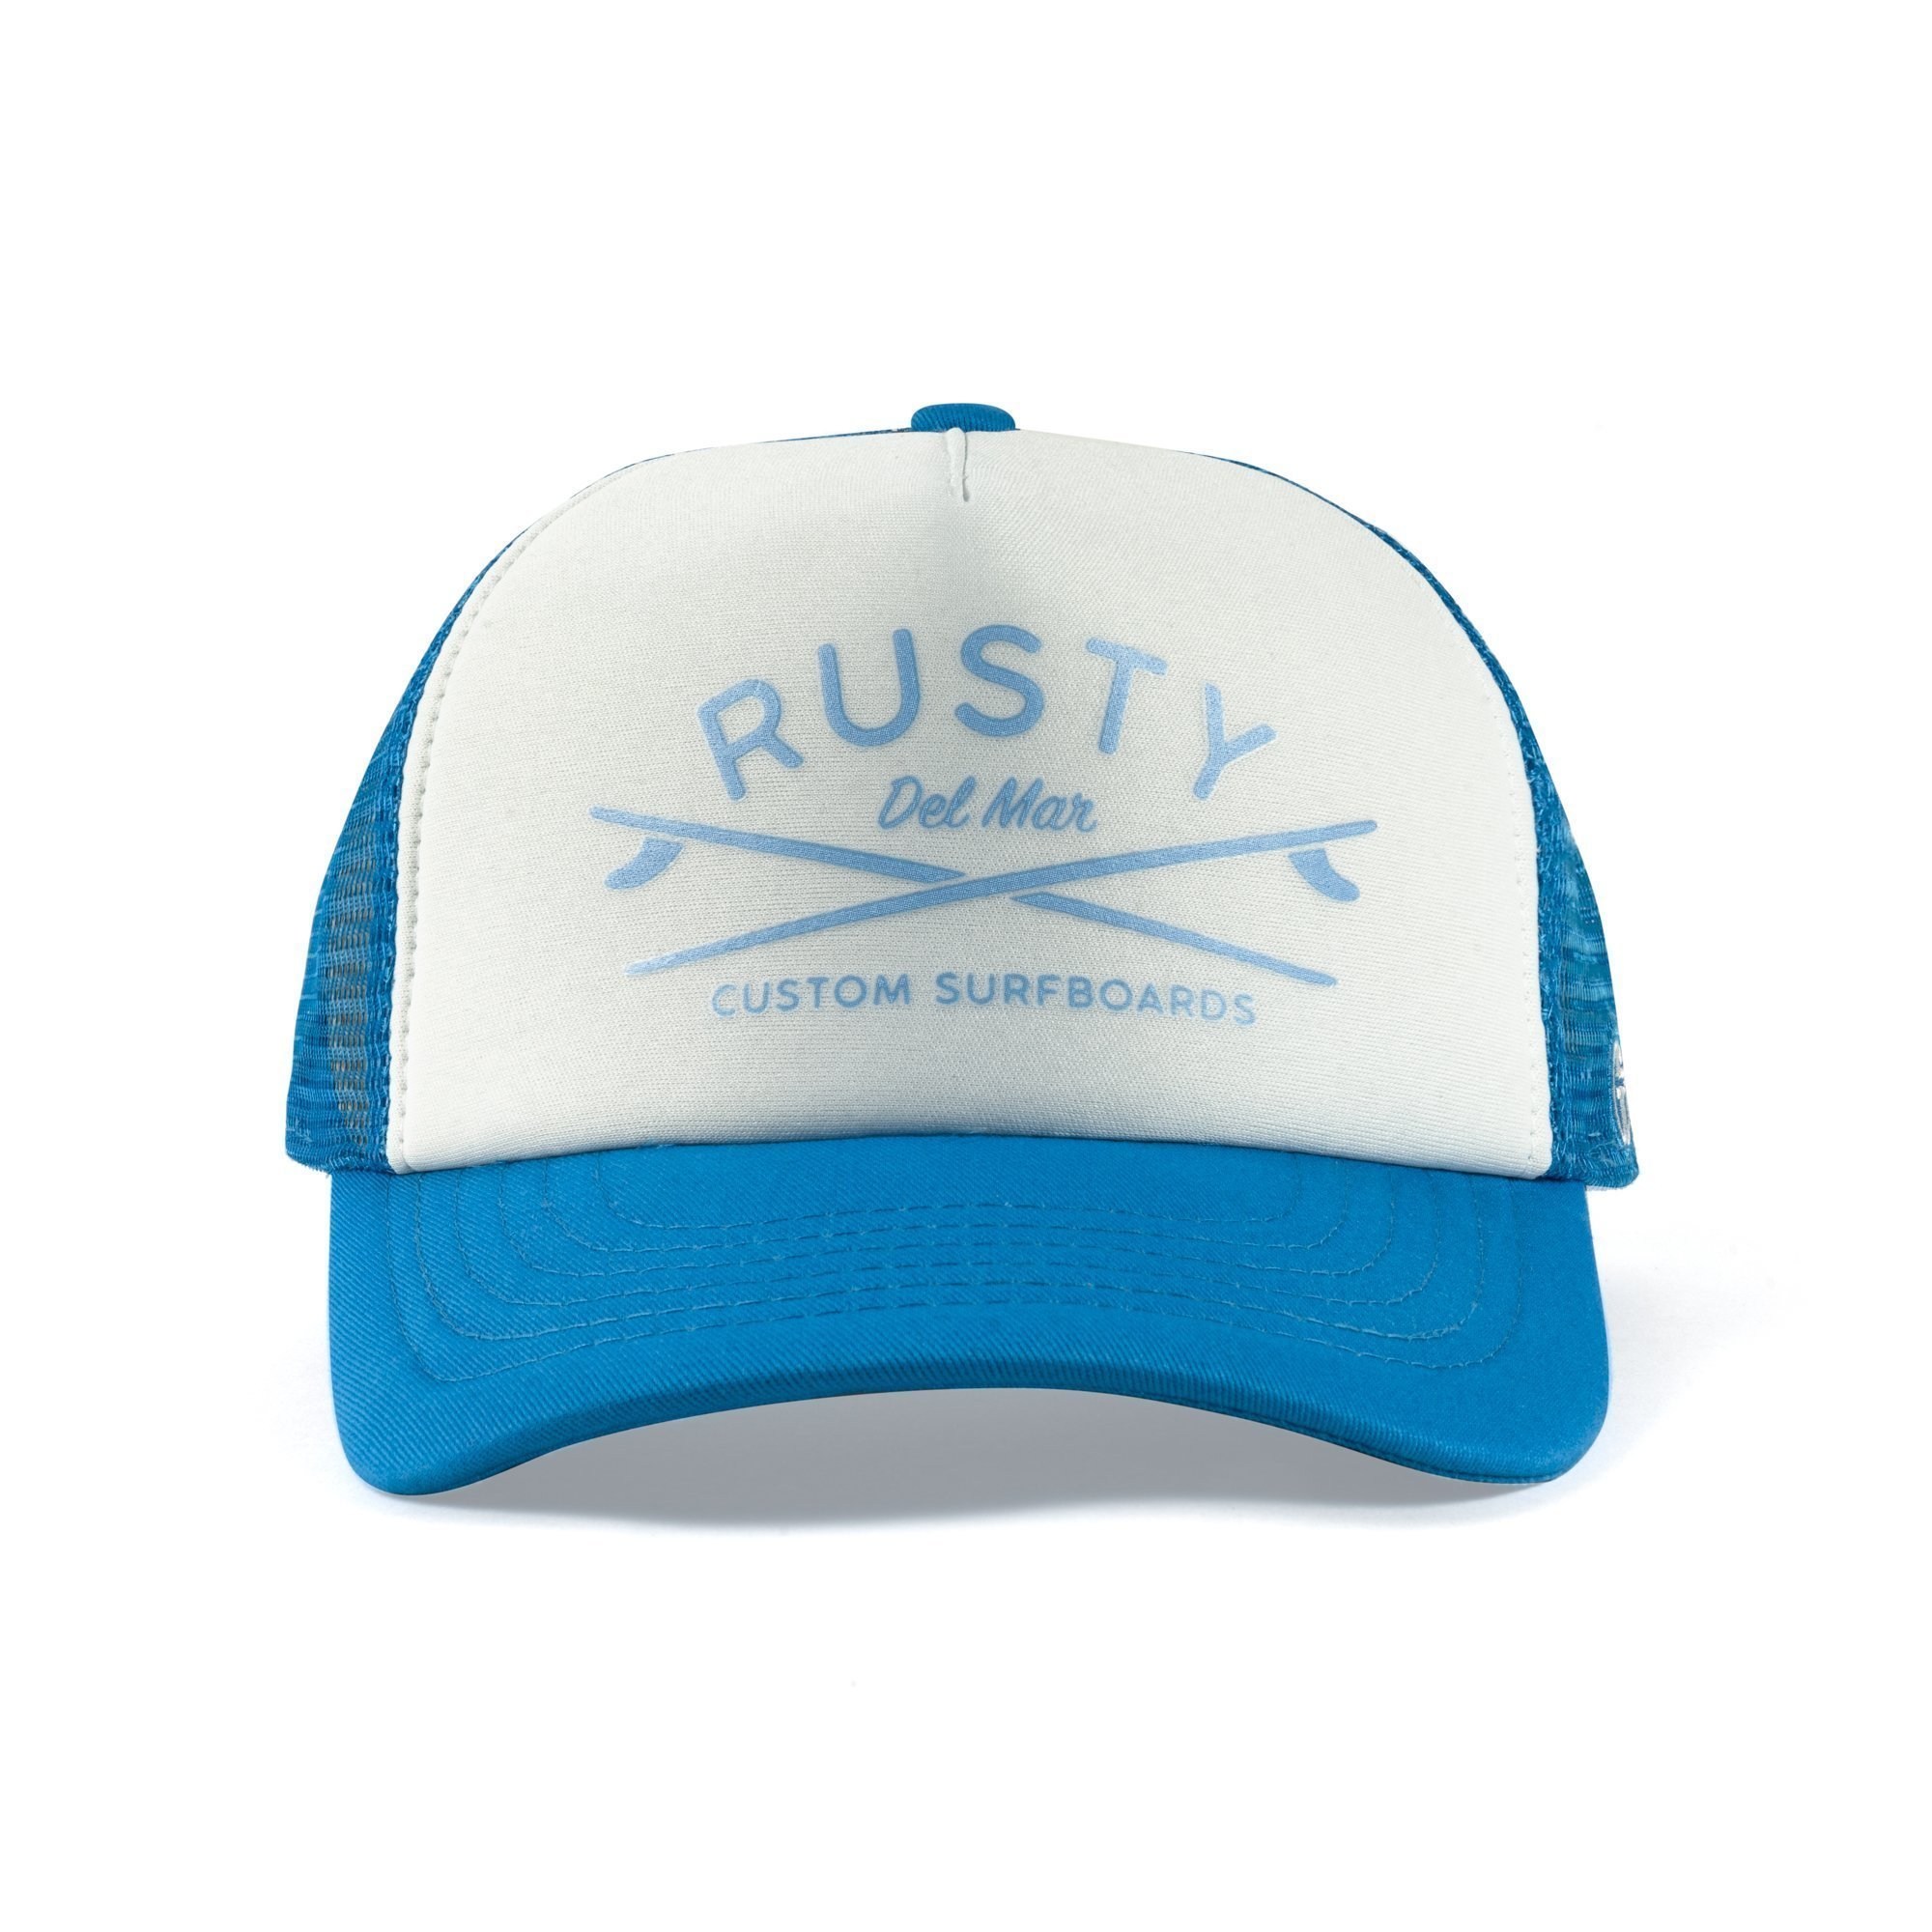 Rusty Del Mar Crossboards Youth Hat